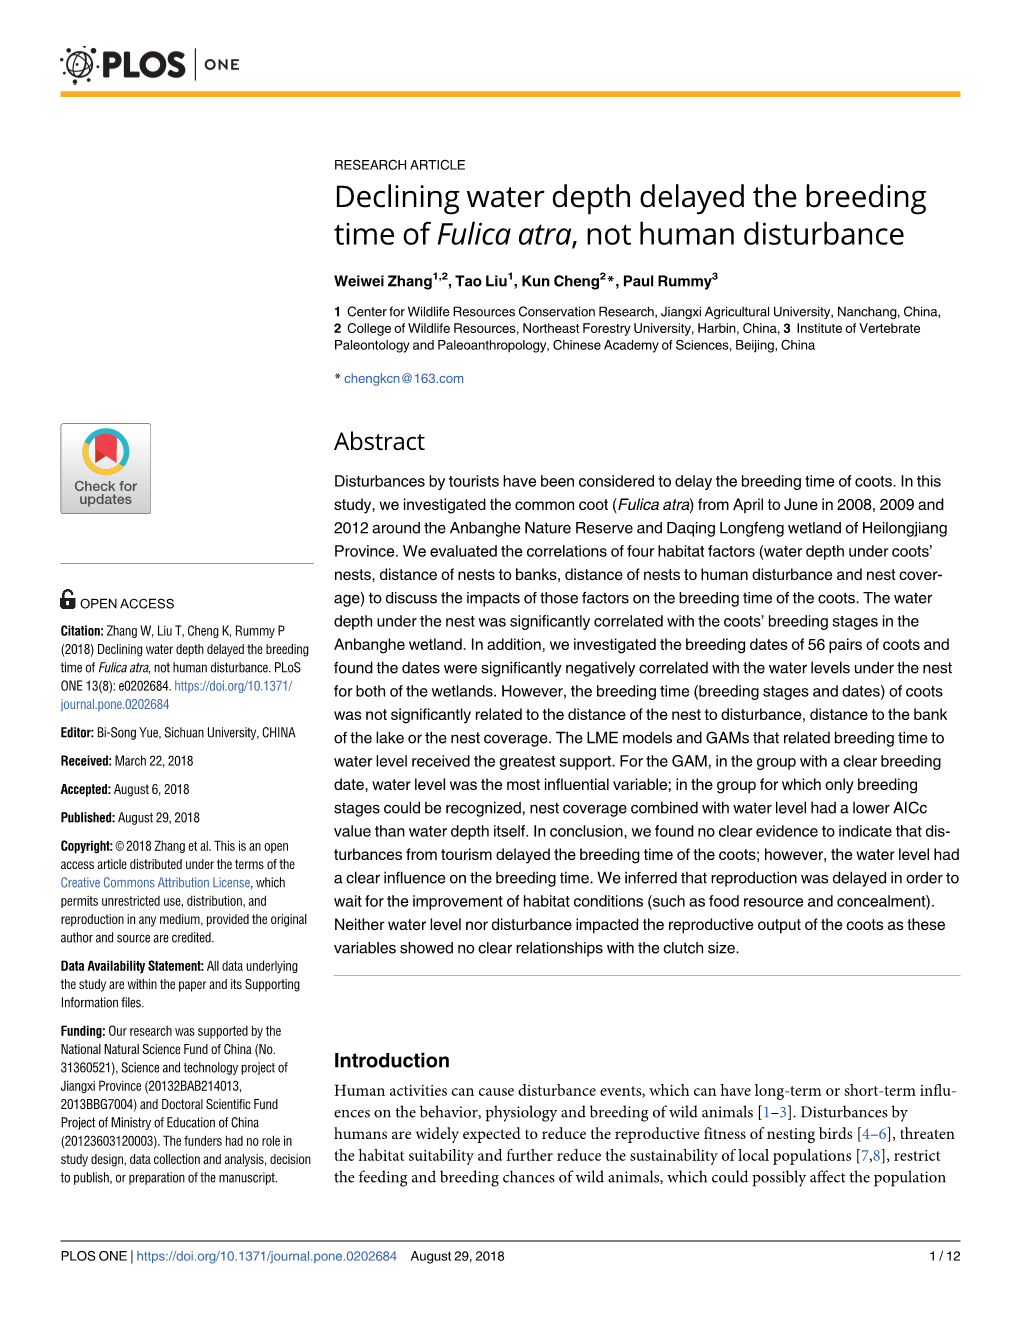 Declining Water Depth Delayed the Breeding Time of Fulica Atra, Not Human Disturbance